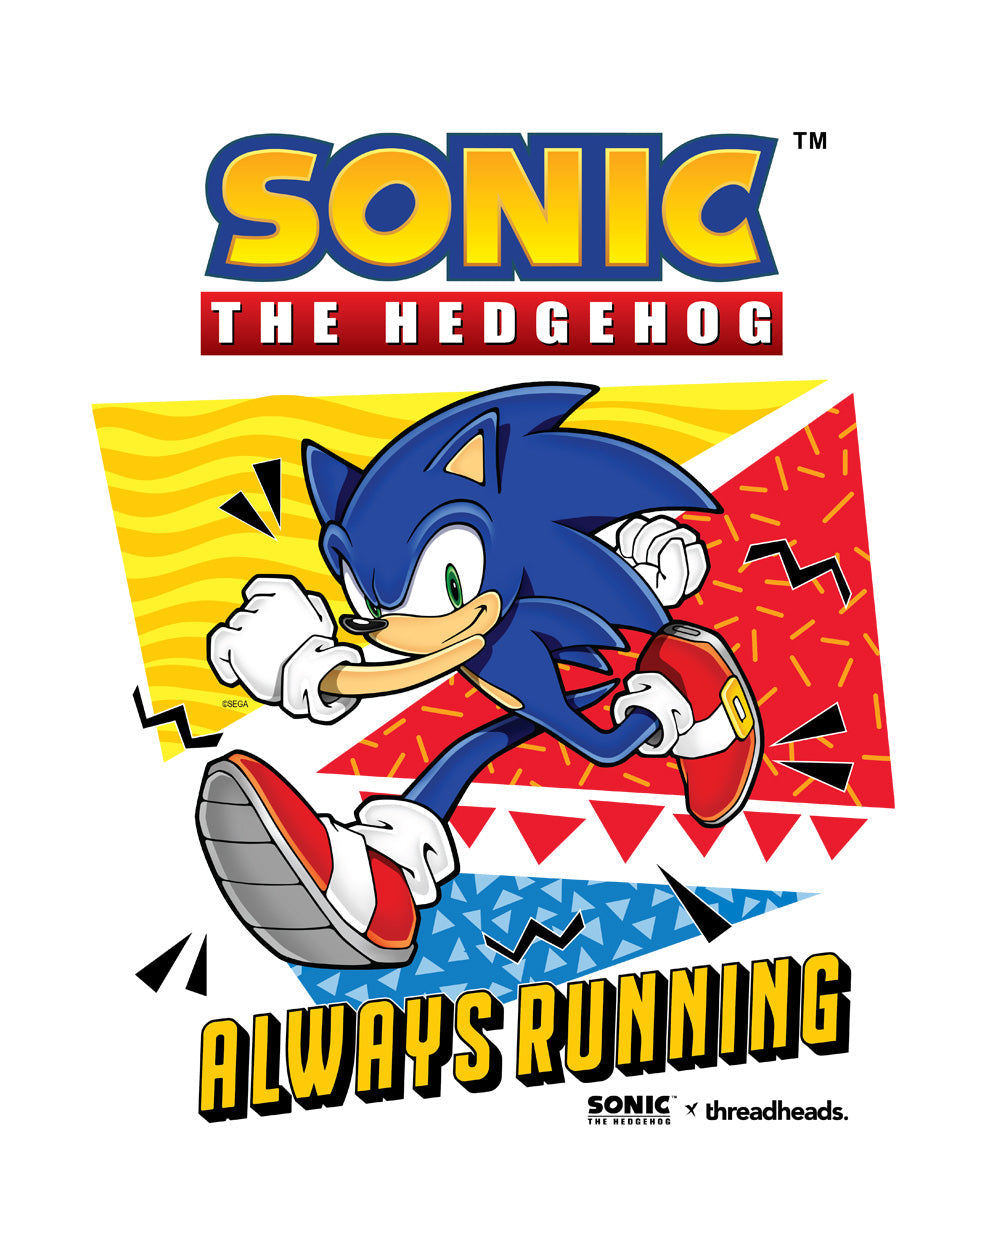 Sonic The Hedgehog Always Running 90s Video Game Cartridge Geek Nerd Console Officially Licensed SEGA T-Shirt